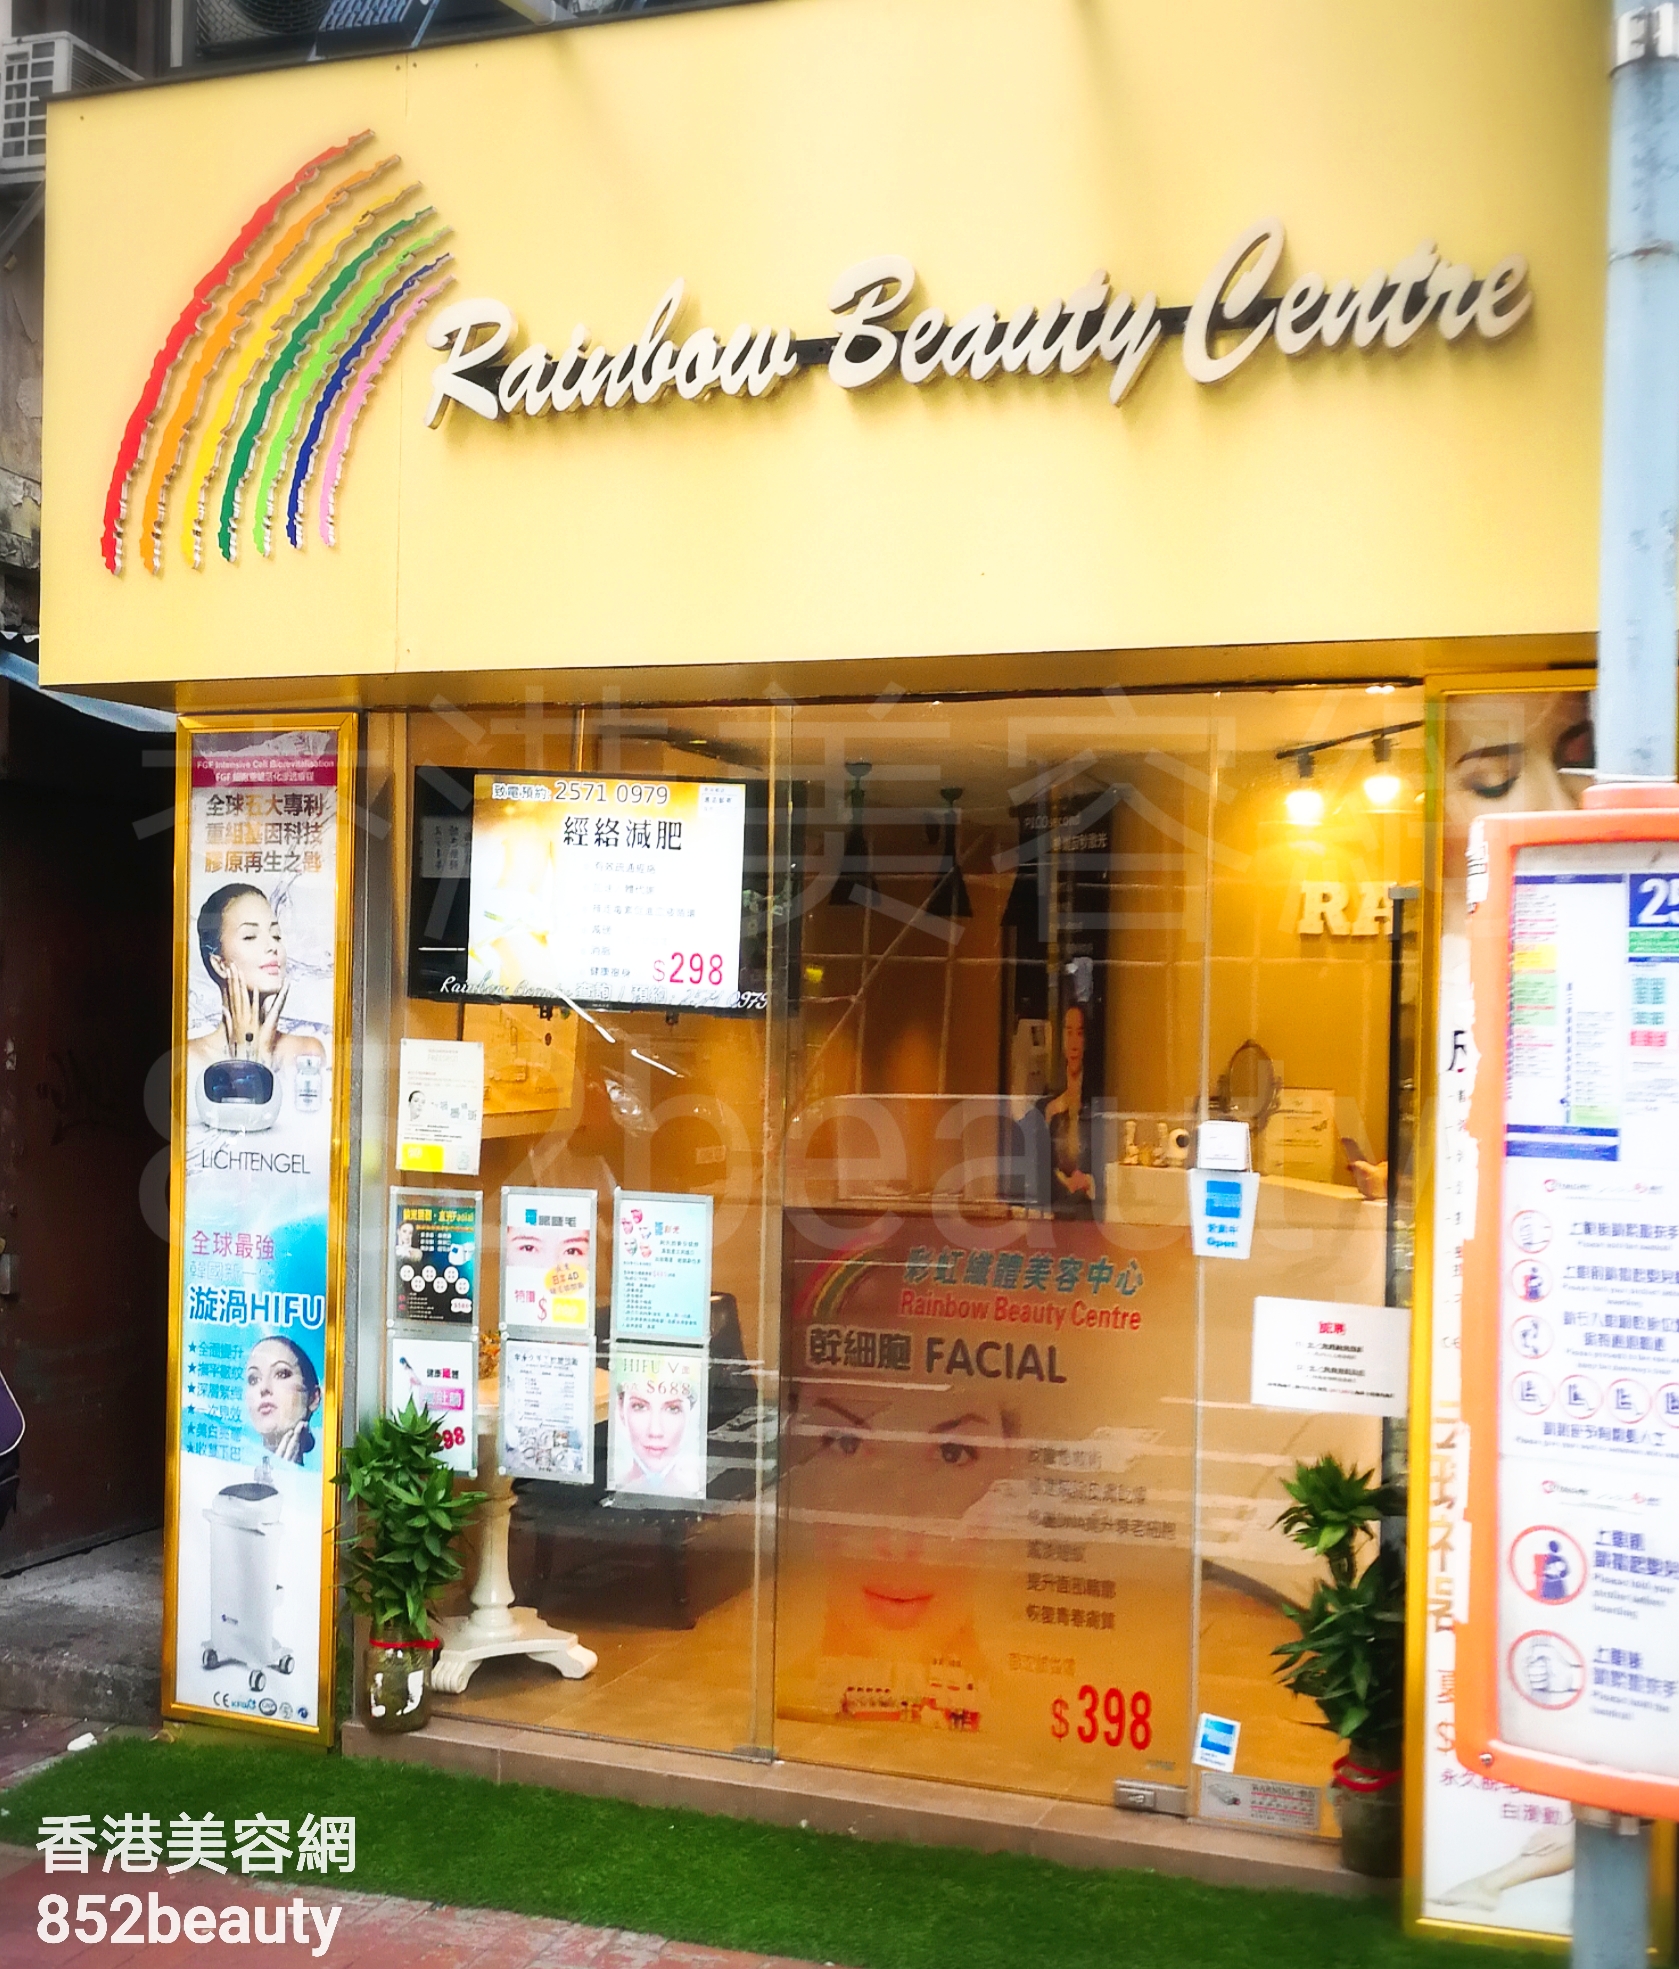 纤体瘦身: Rainbow Beauty Centre